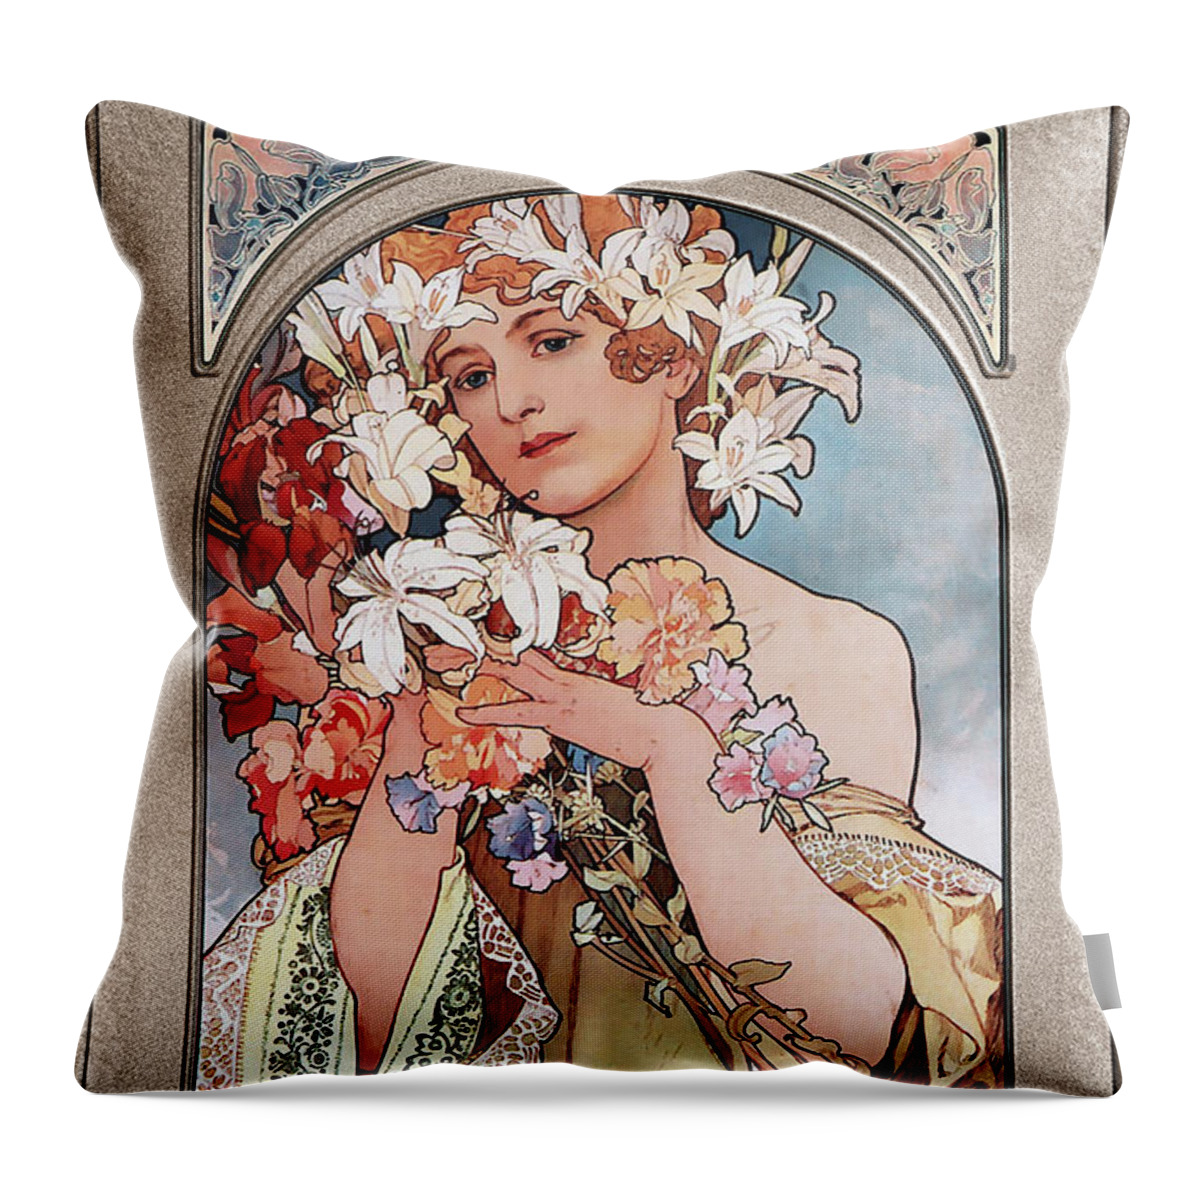 Flower Throw Pillow featuring the painting Flower by Alphonse Mucha Art Nouveau Vingtage Art by Rolando Burbon